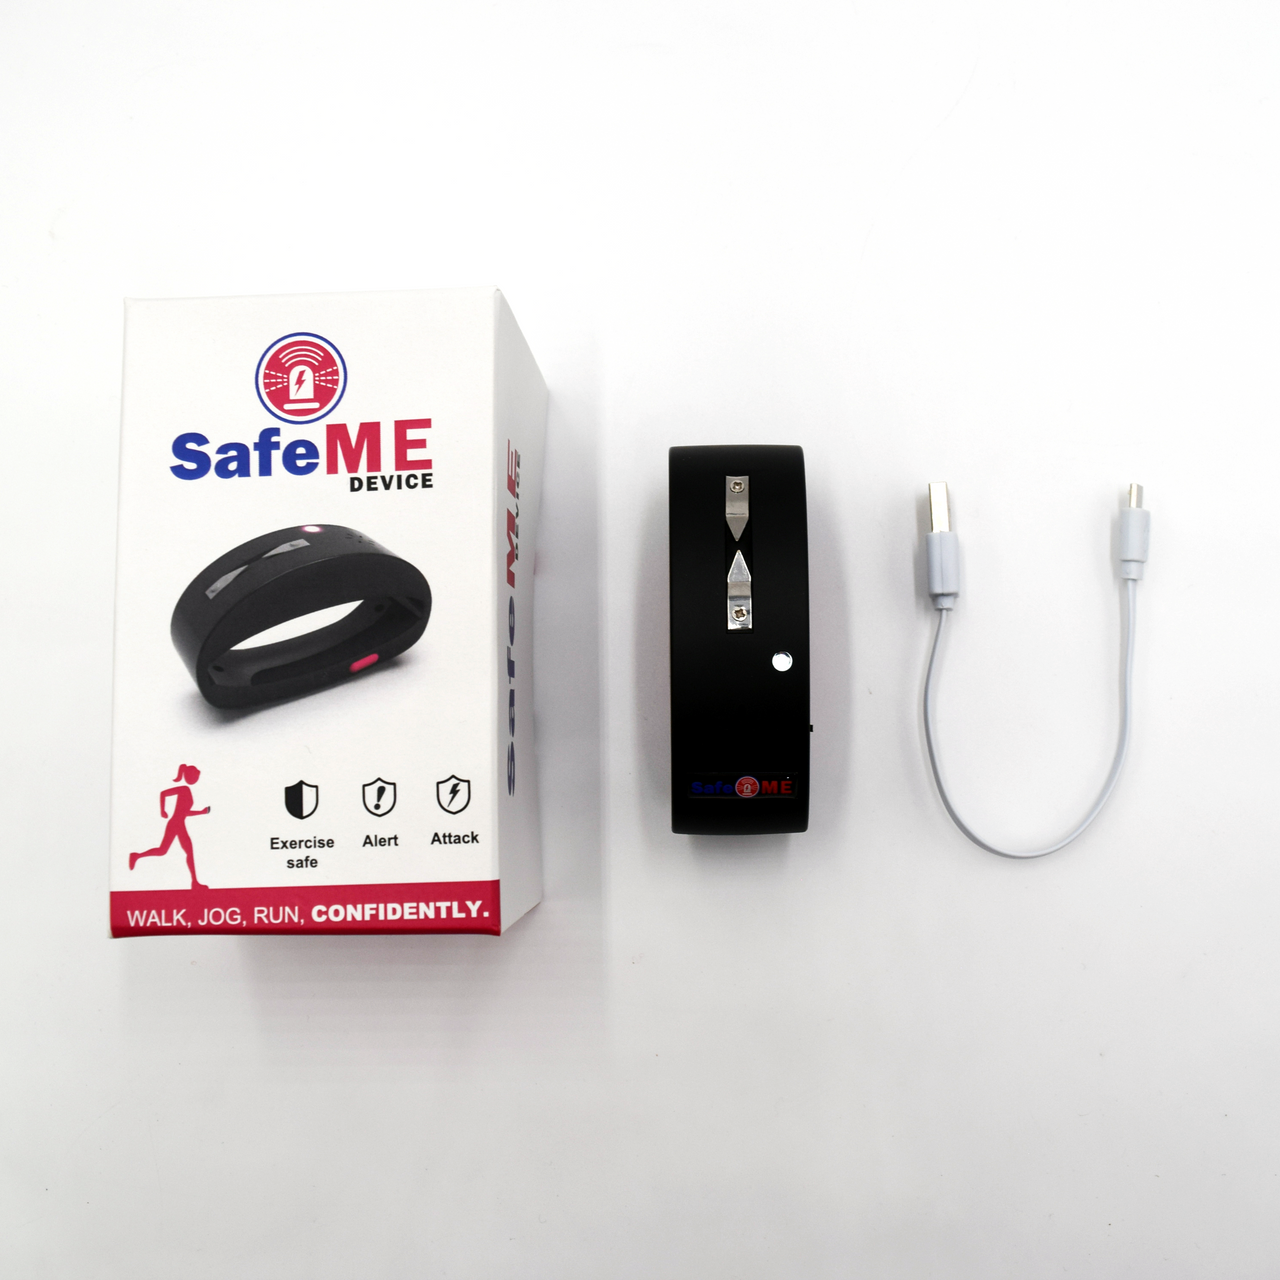 SafeMe Device